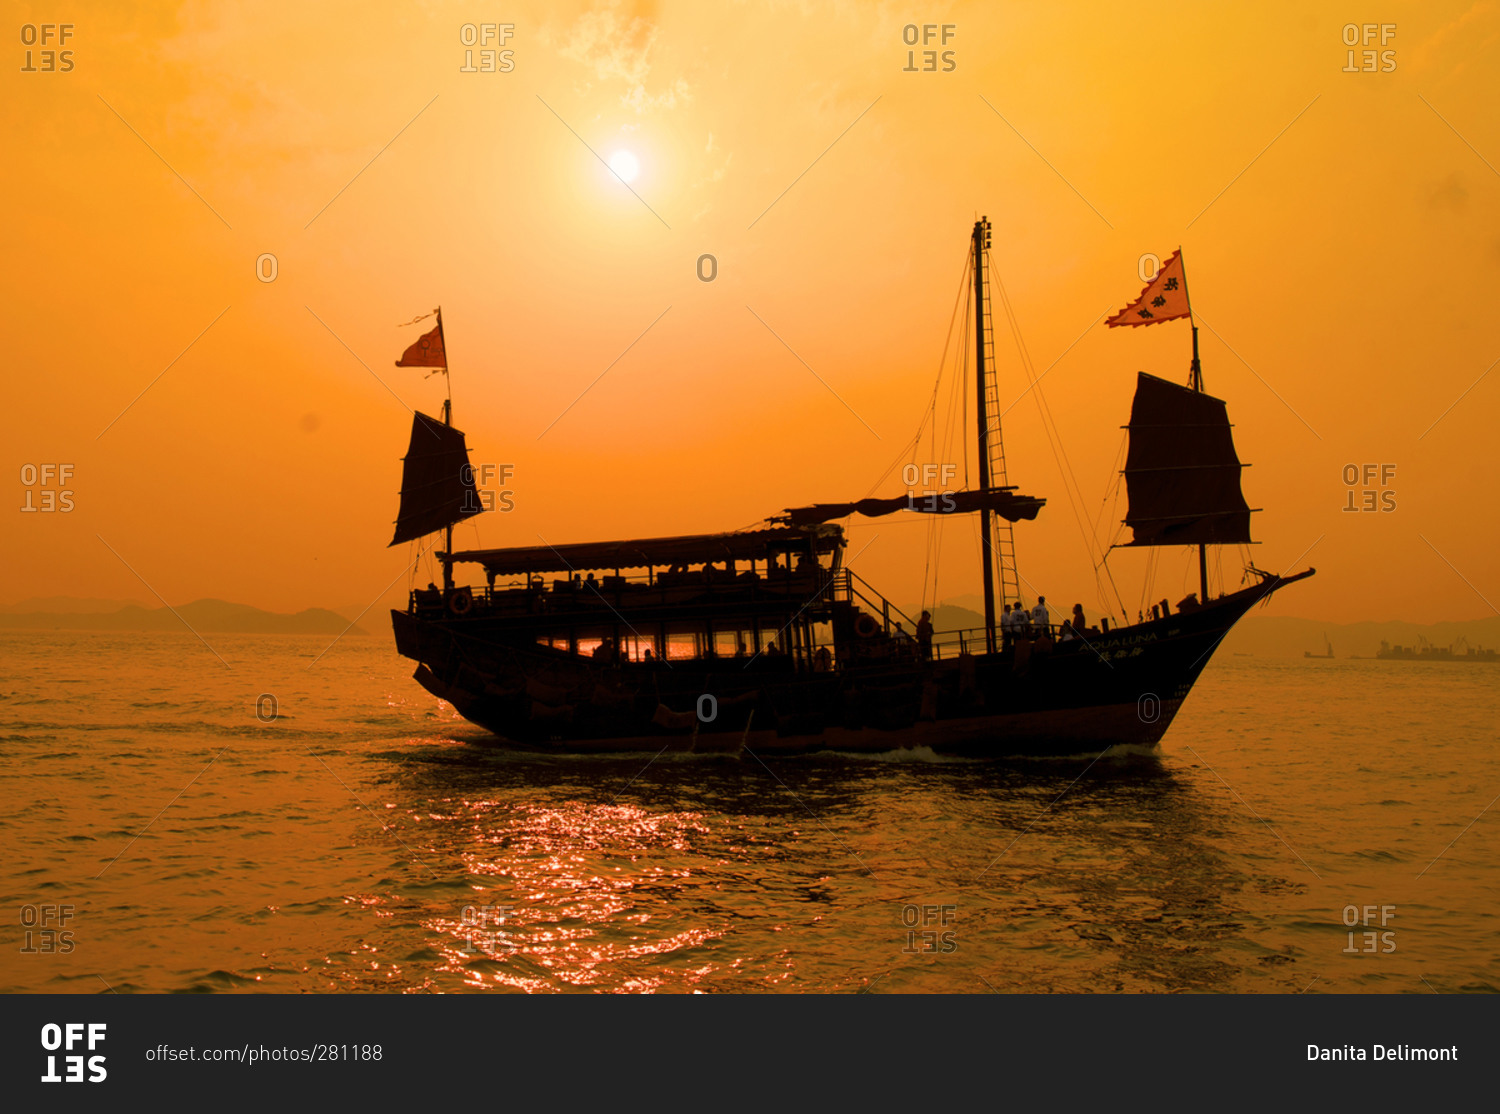 A junk sails through Aberdeen harbor near Hong Kong at sunset, Hong Kong, China